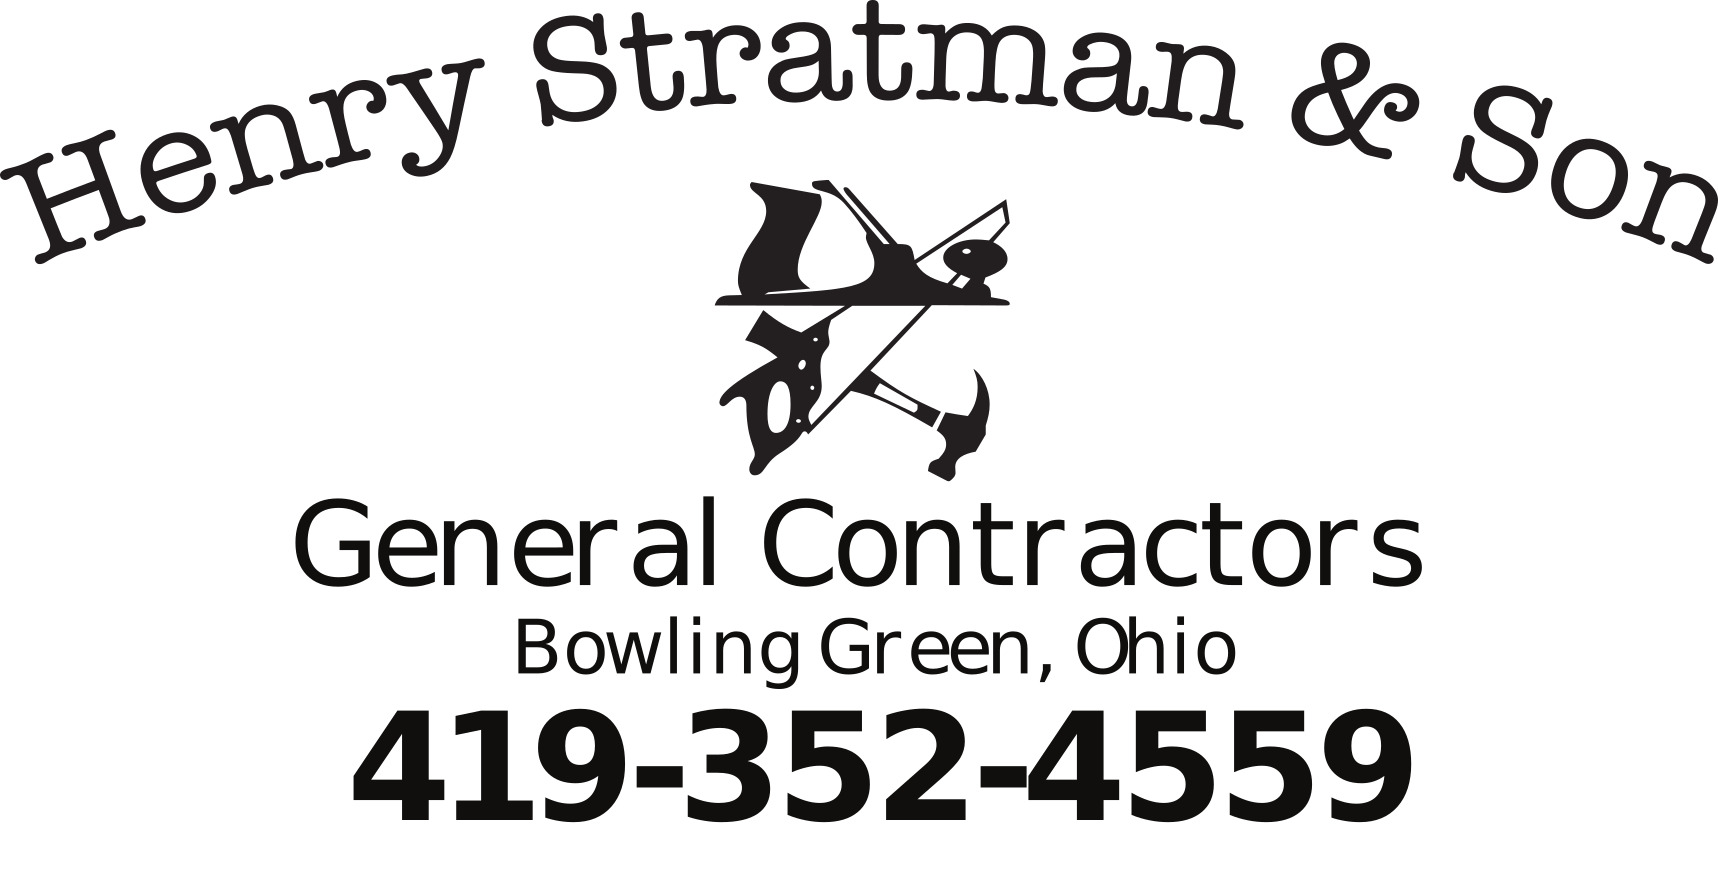 Henry Stratman & Son, General Contractor 